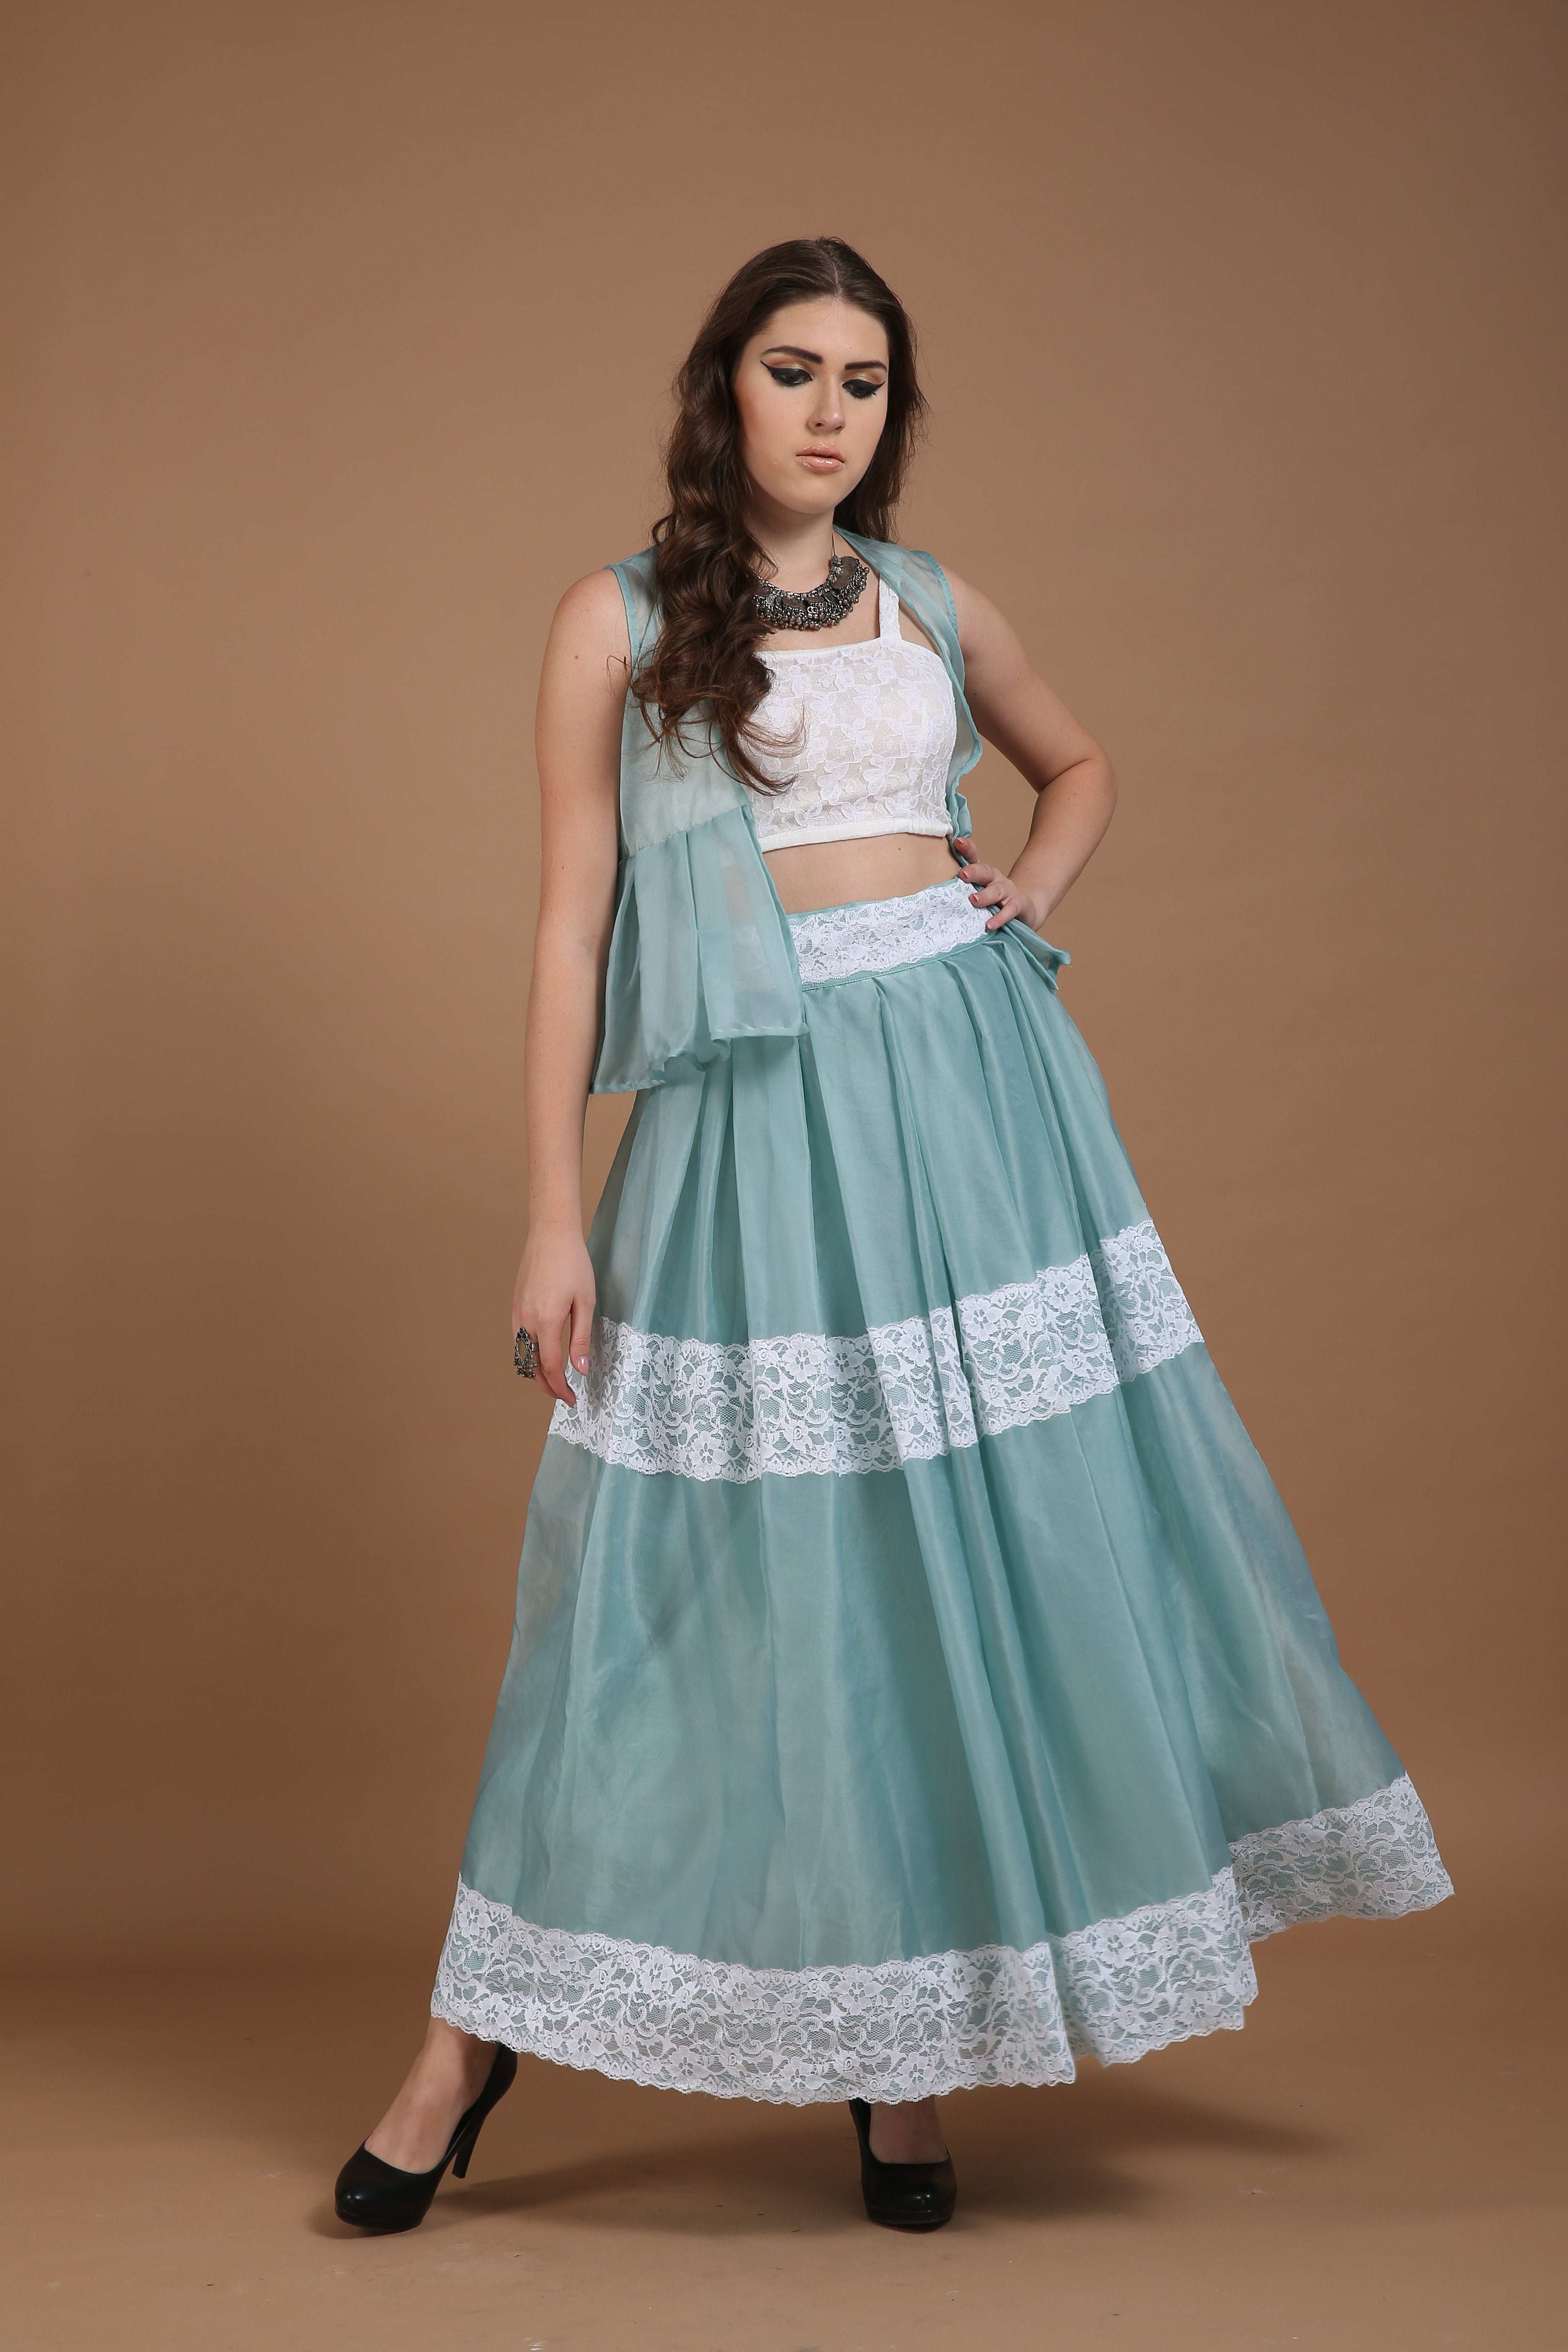 Bhagyashree Singh Raghuwanshi - 3 Piece Skirt Light Blue & White Set